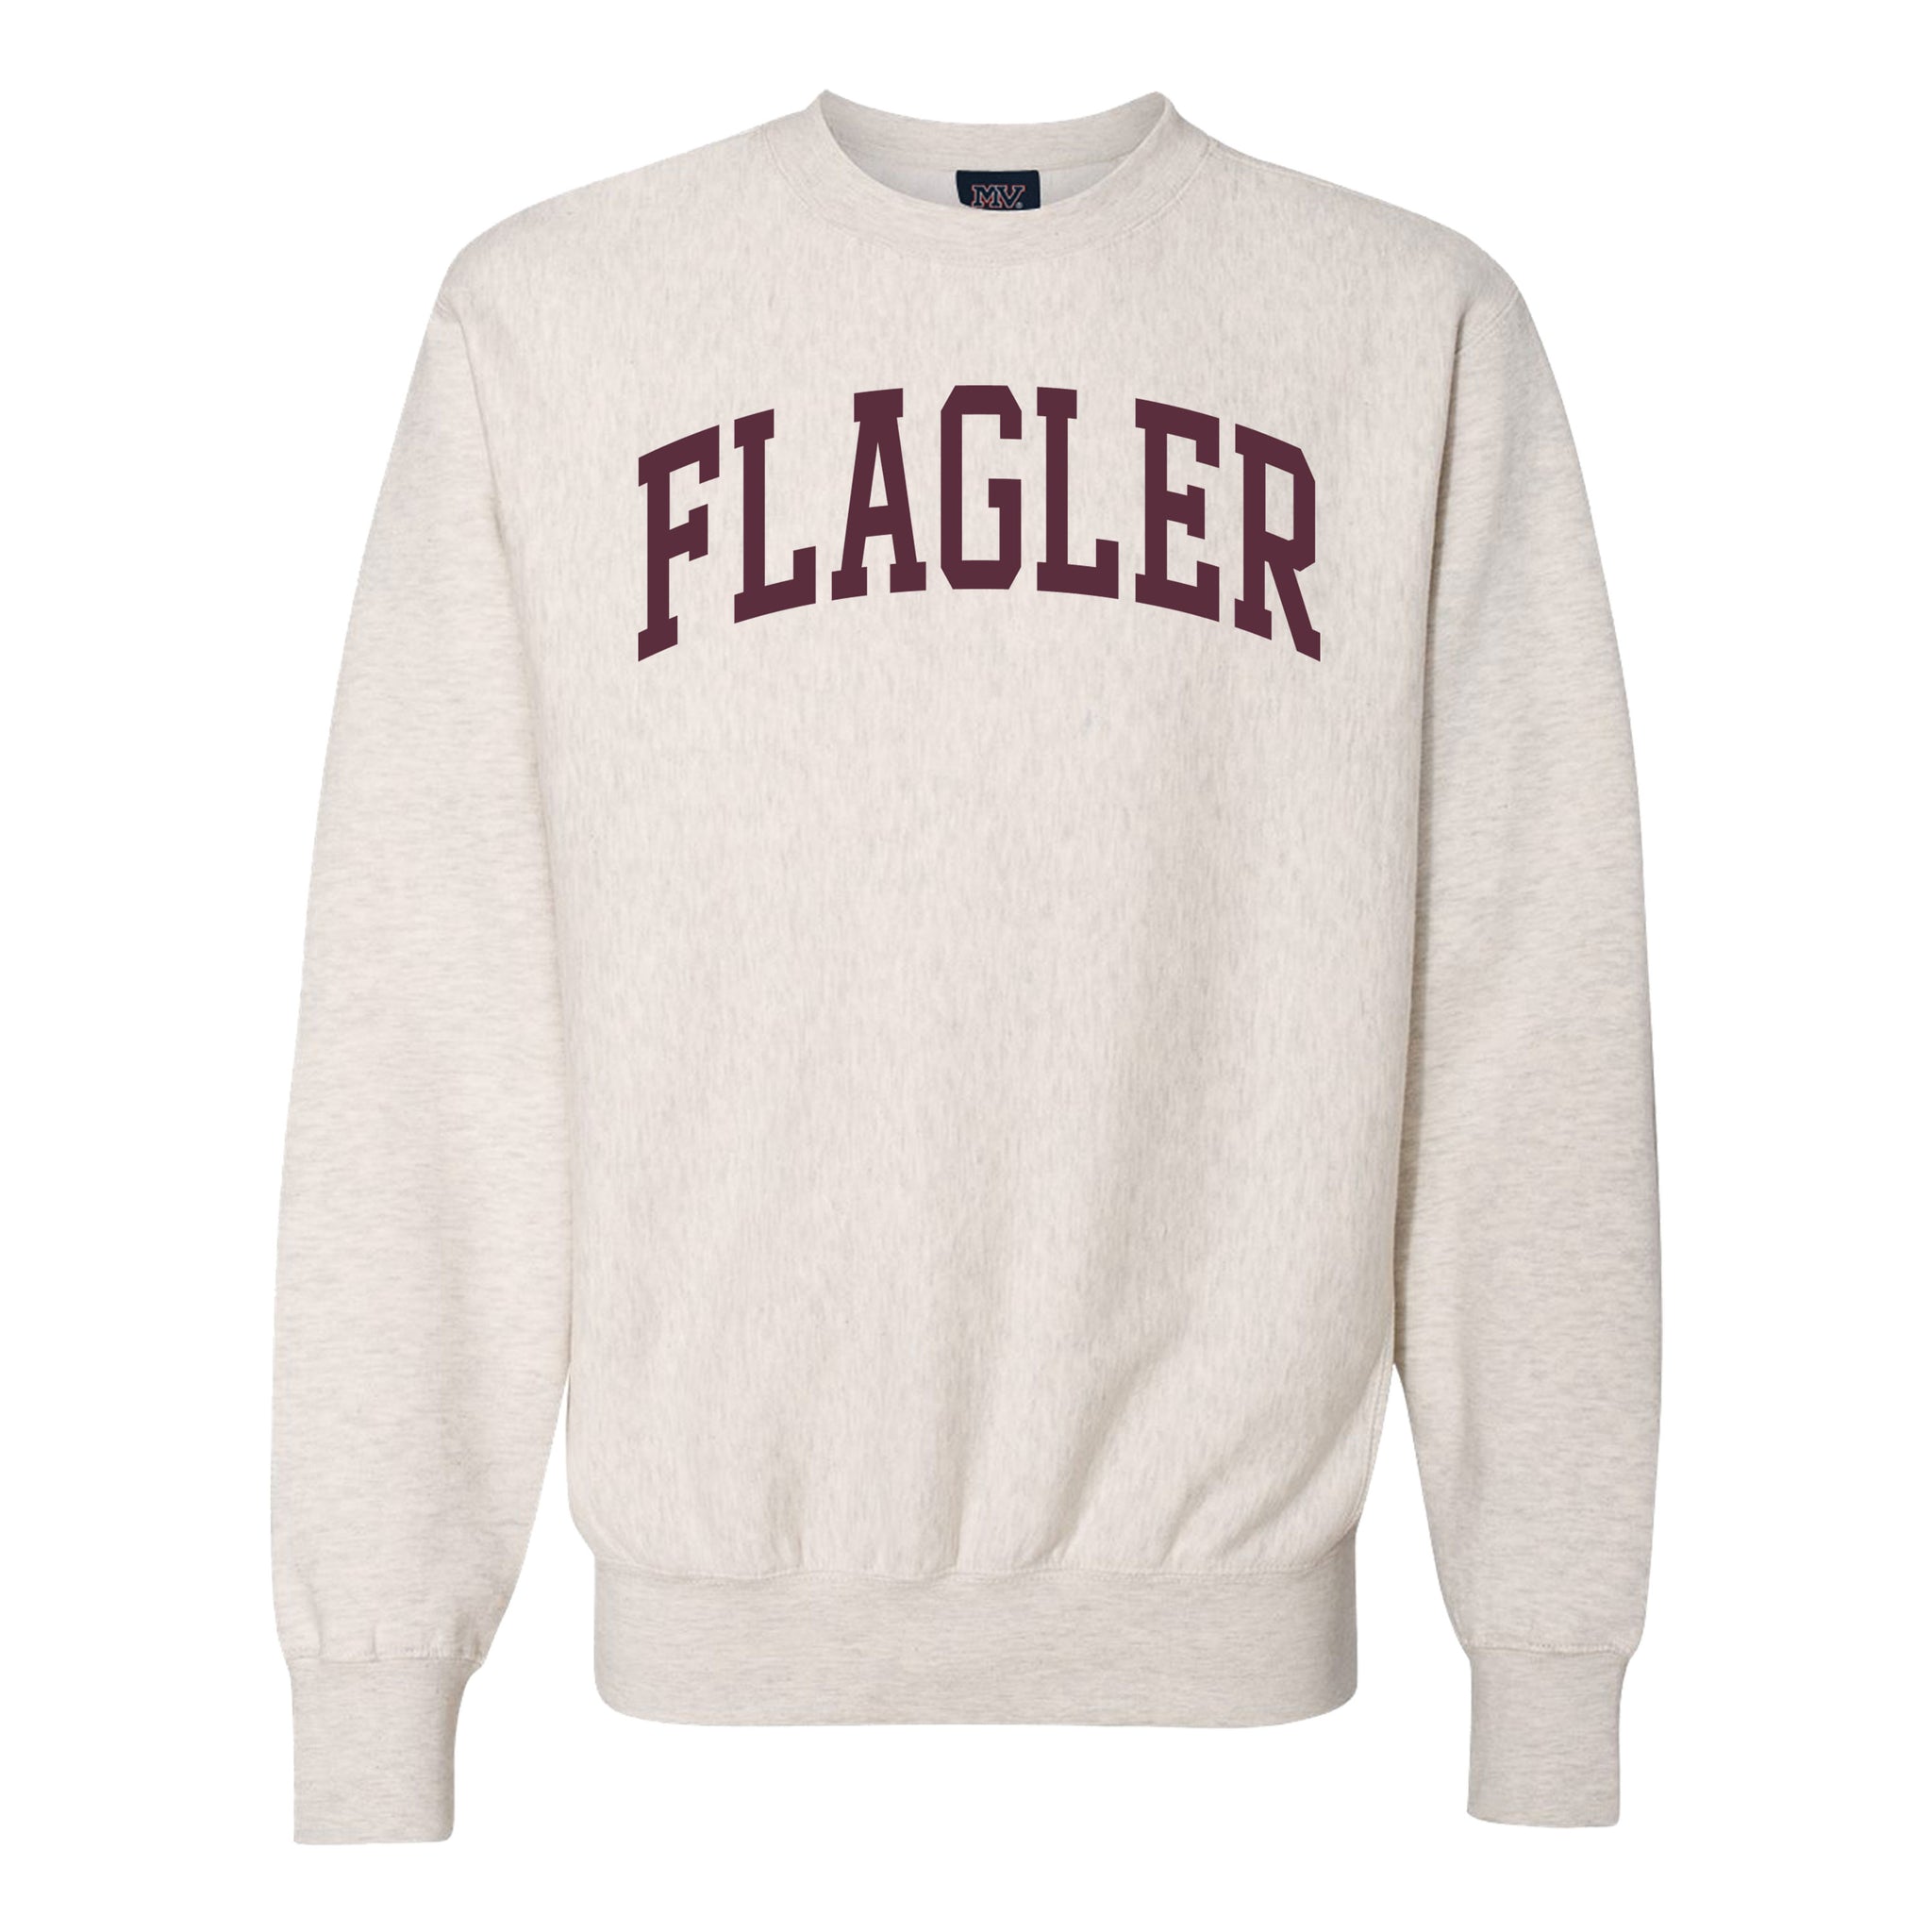 oatmeal solid crewneck sweatshirt with crimson imprint saying Flagler